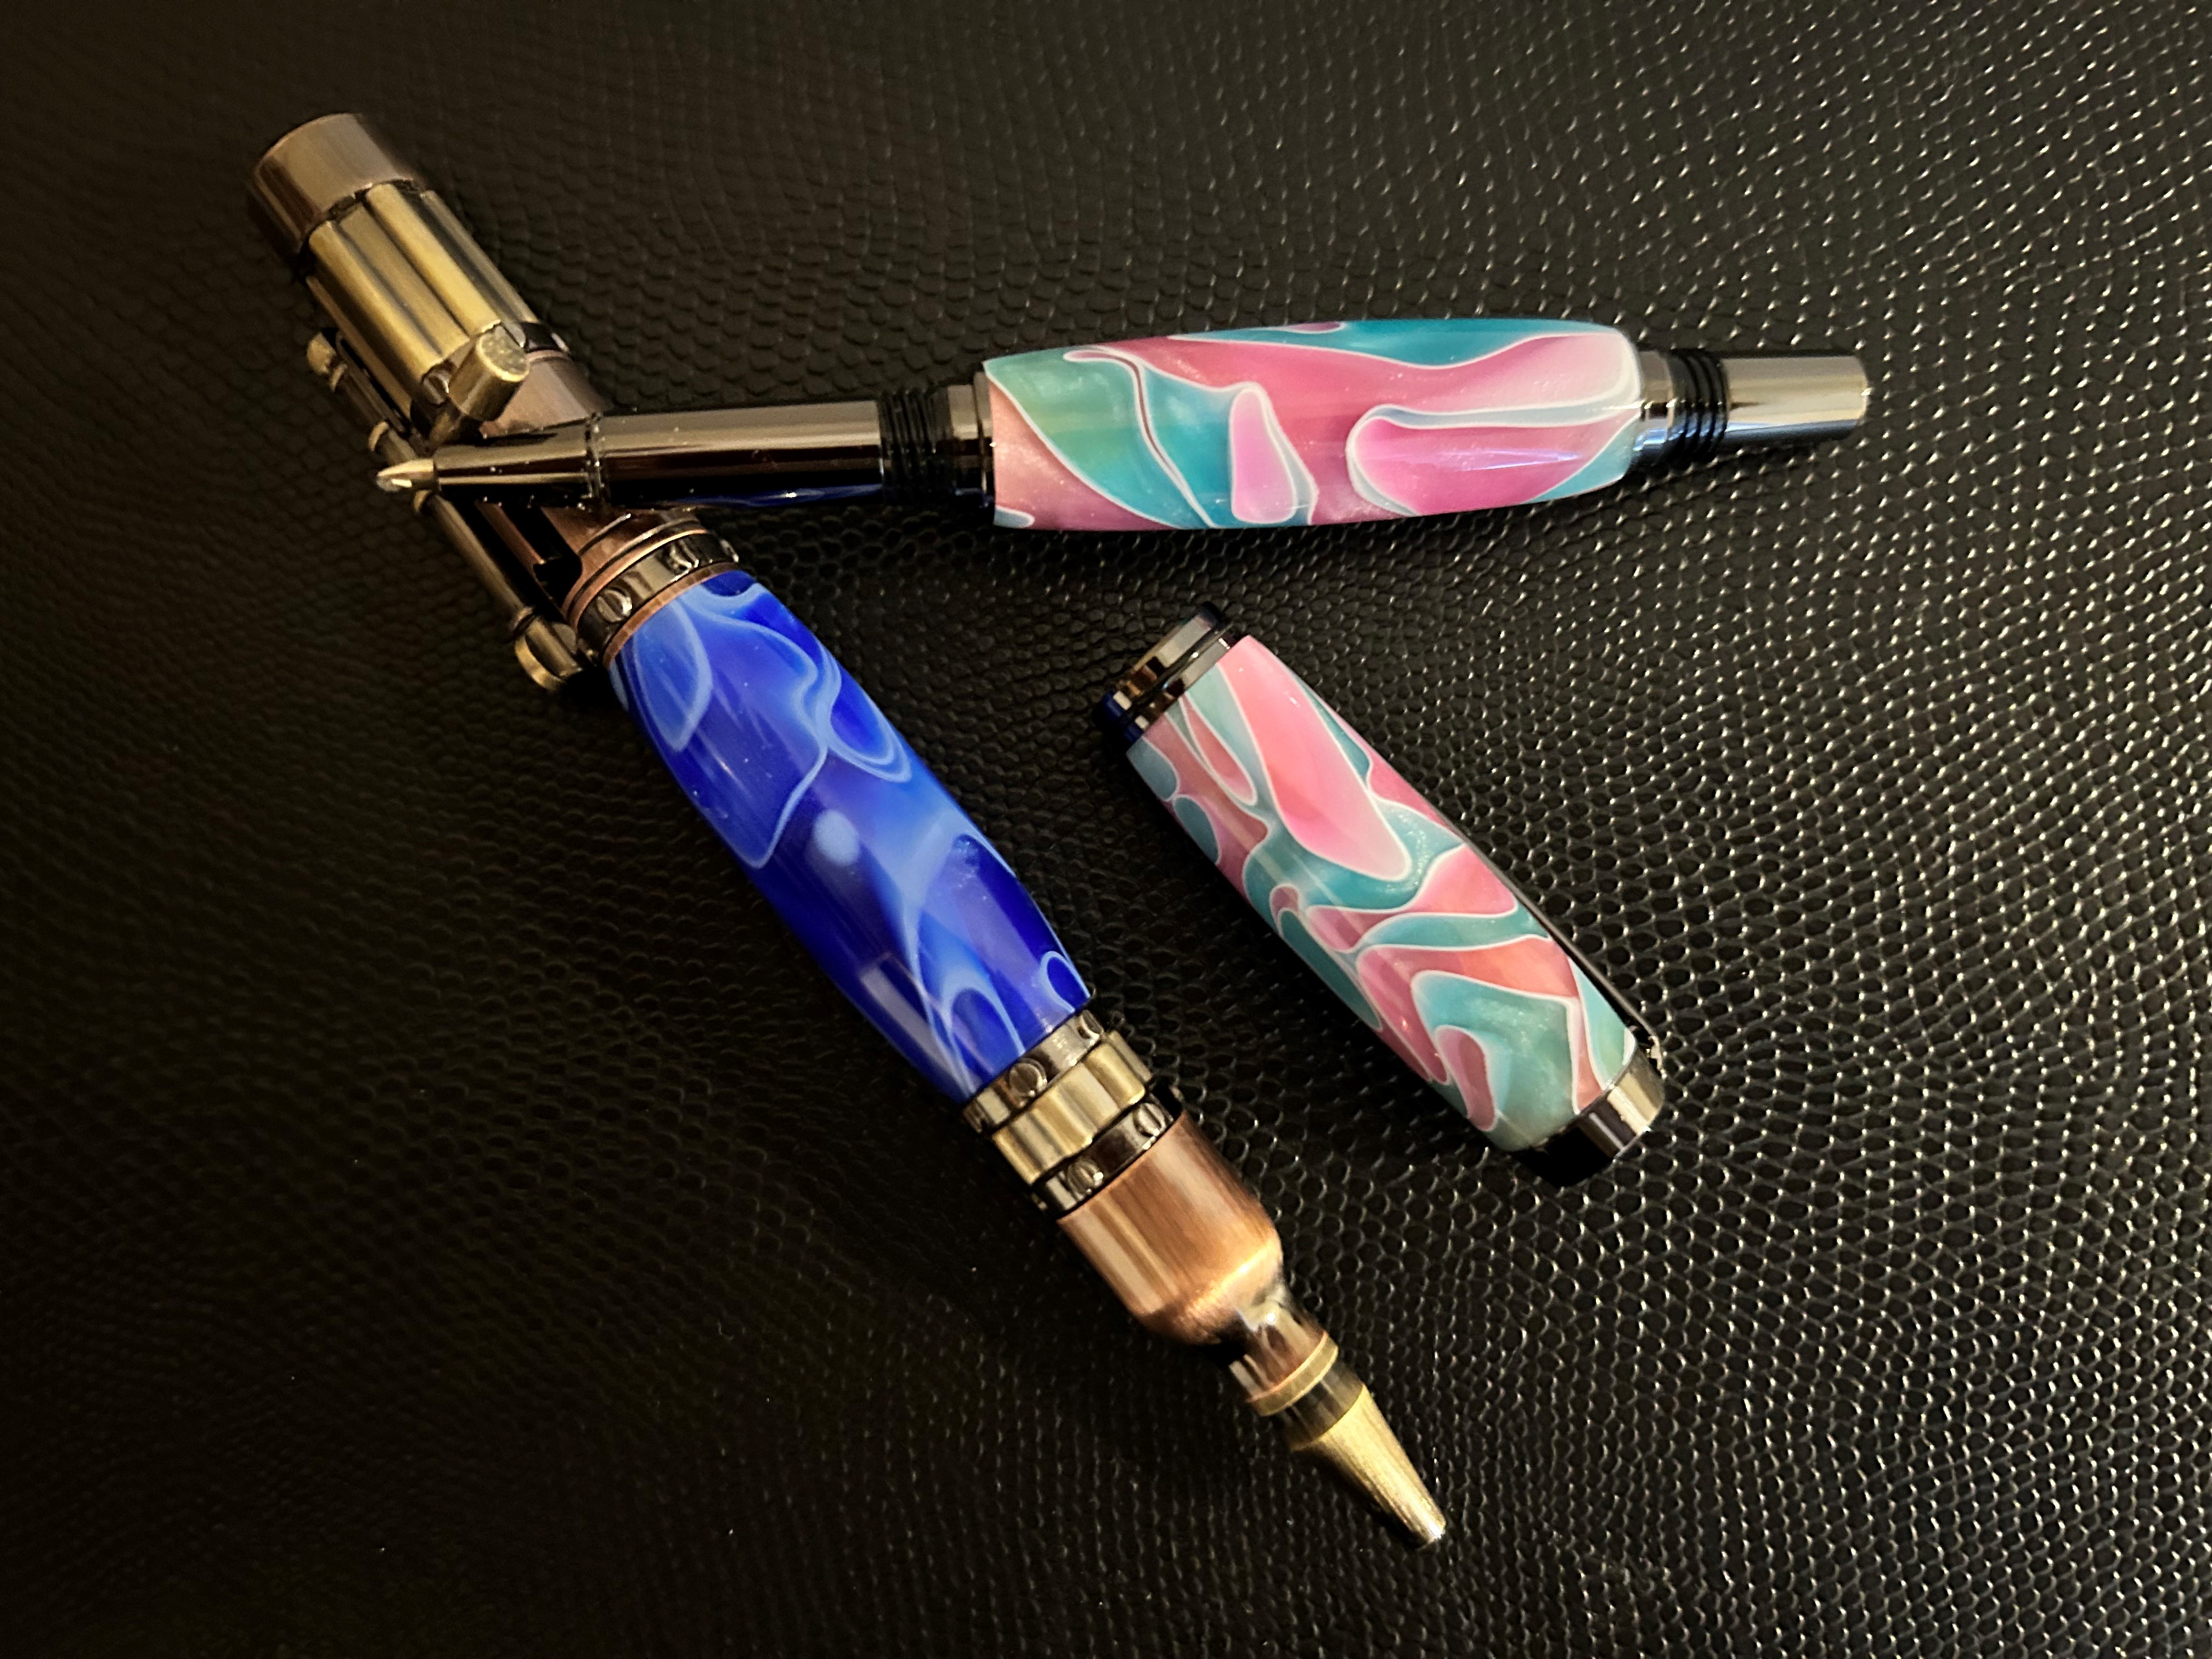 more pens